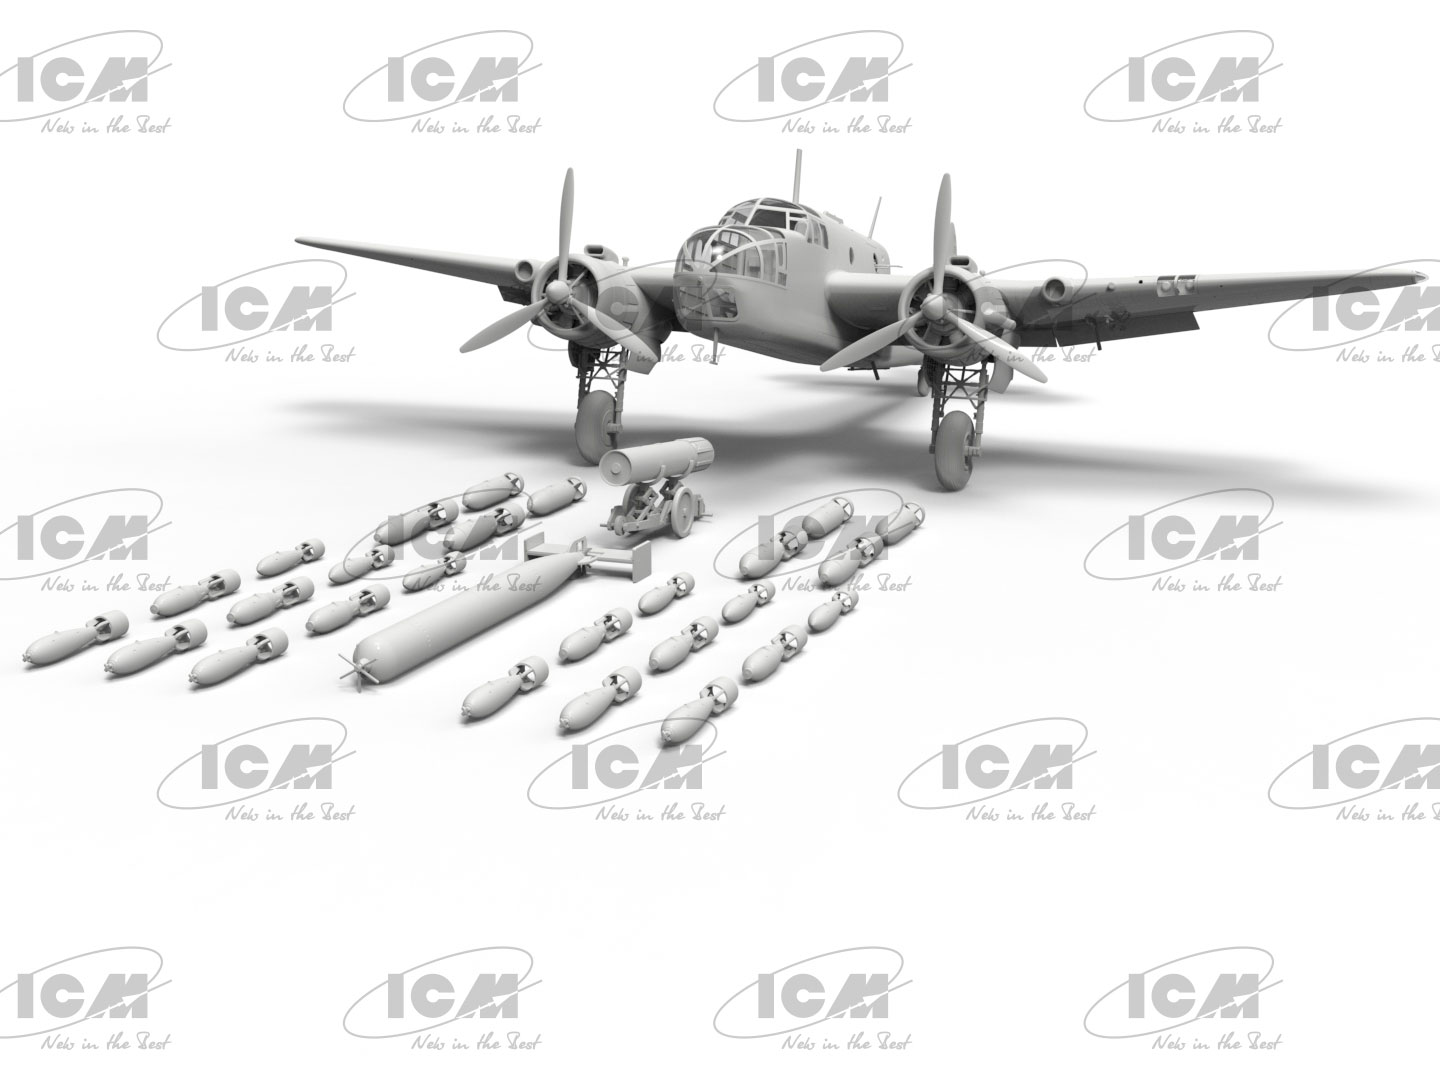 ICM 1/48 Bristol Beaufort Mk.I. Bombing Raid # 48314